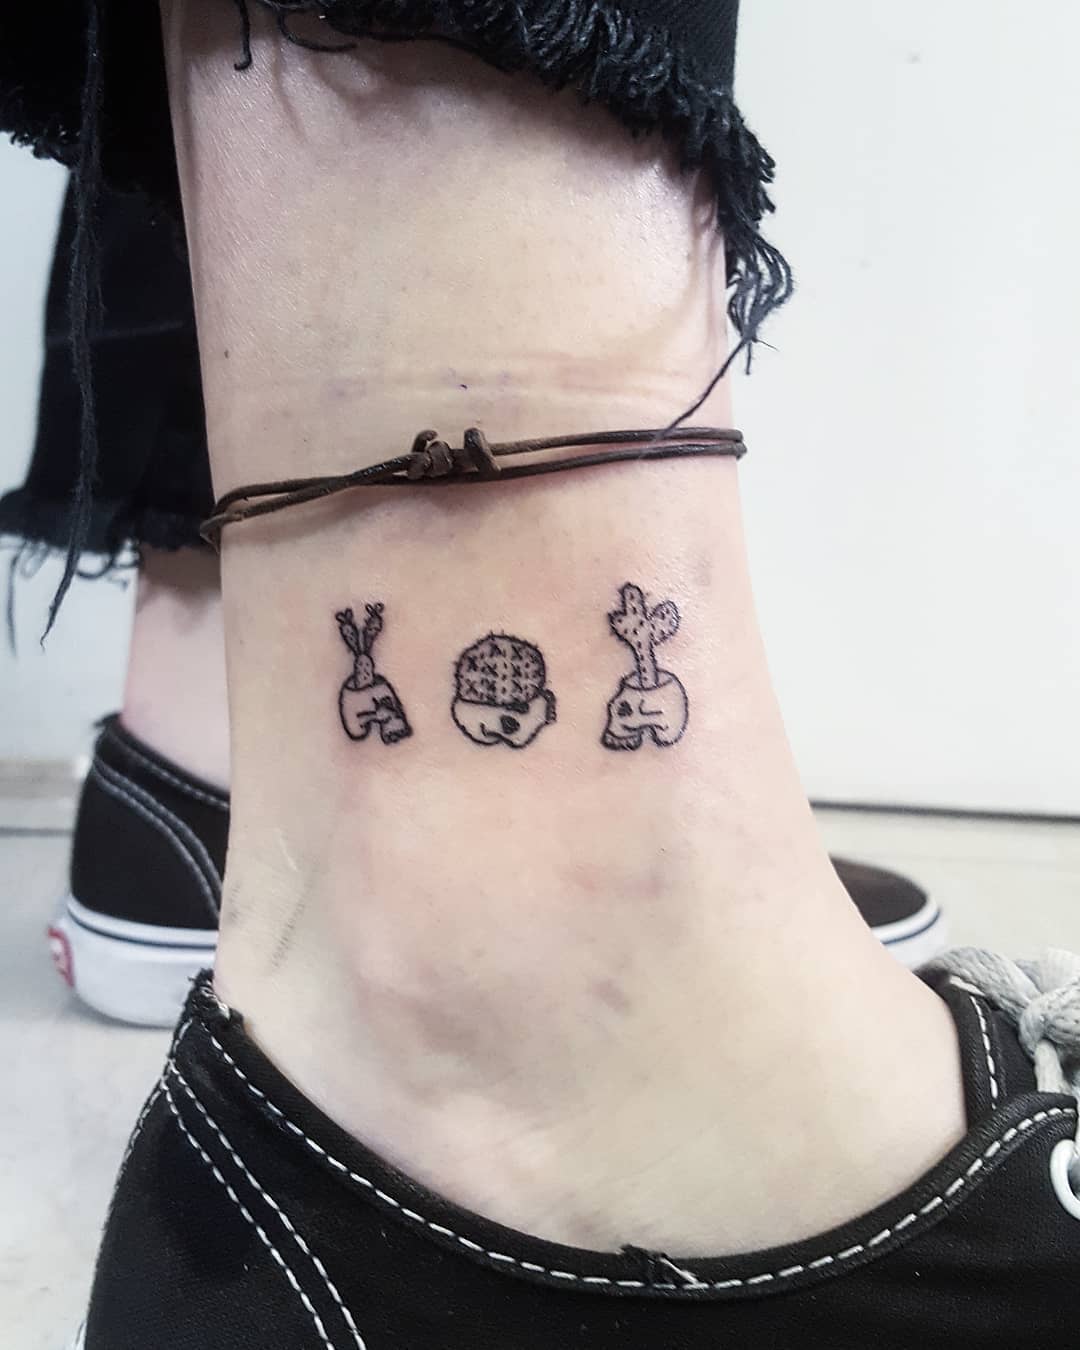 Black skull and cactus tattoo on ankle.